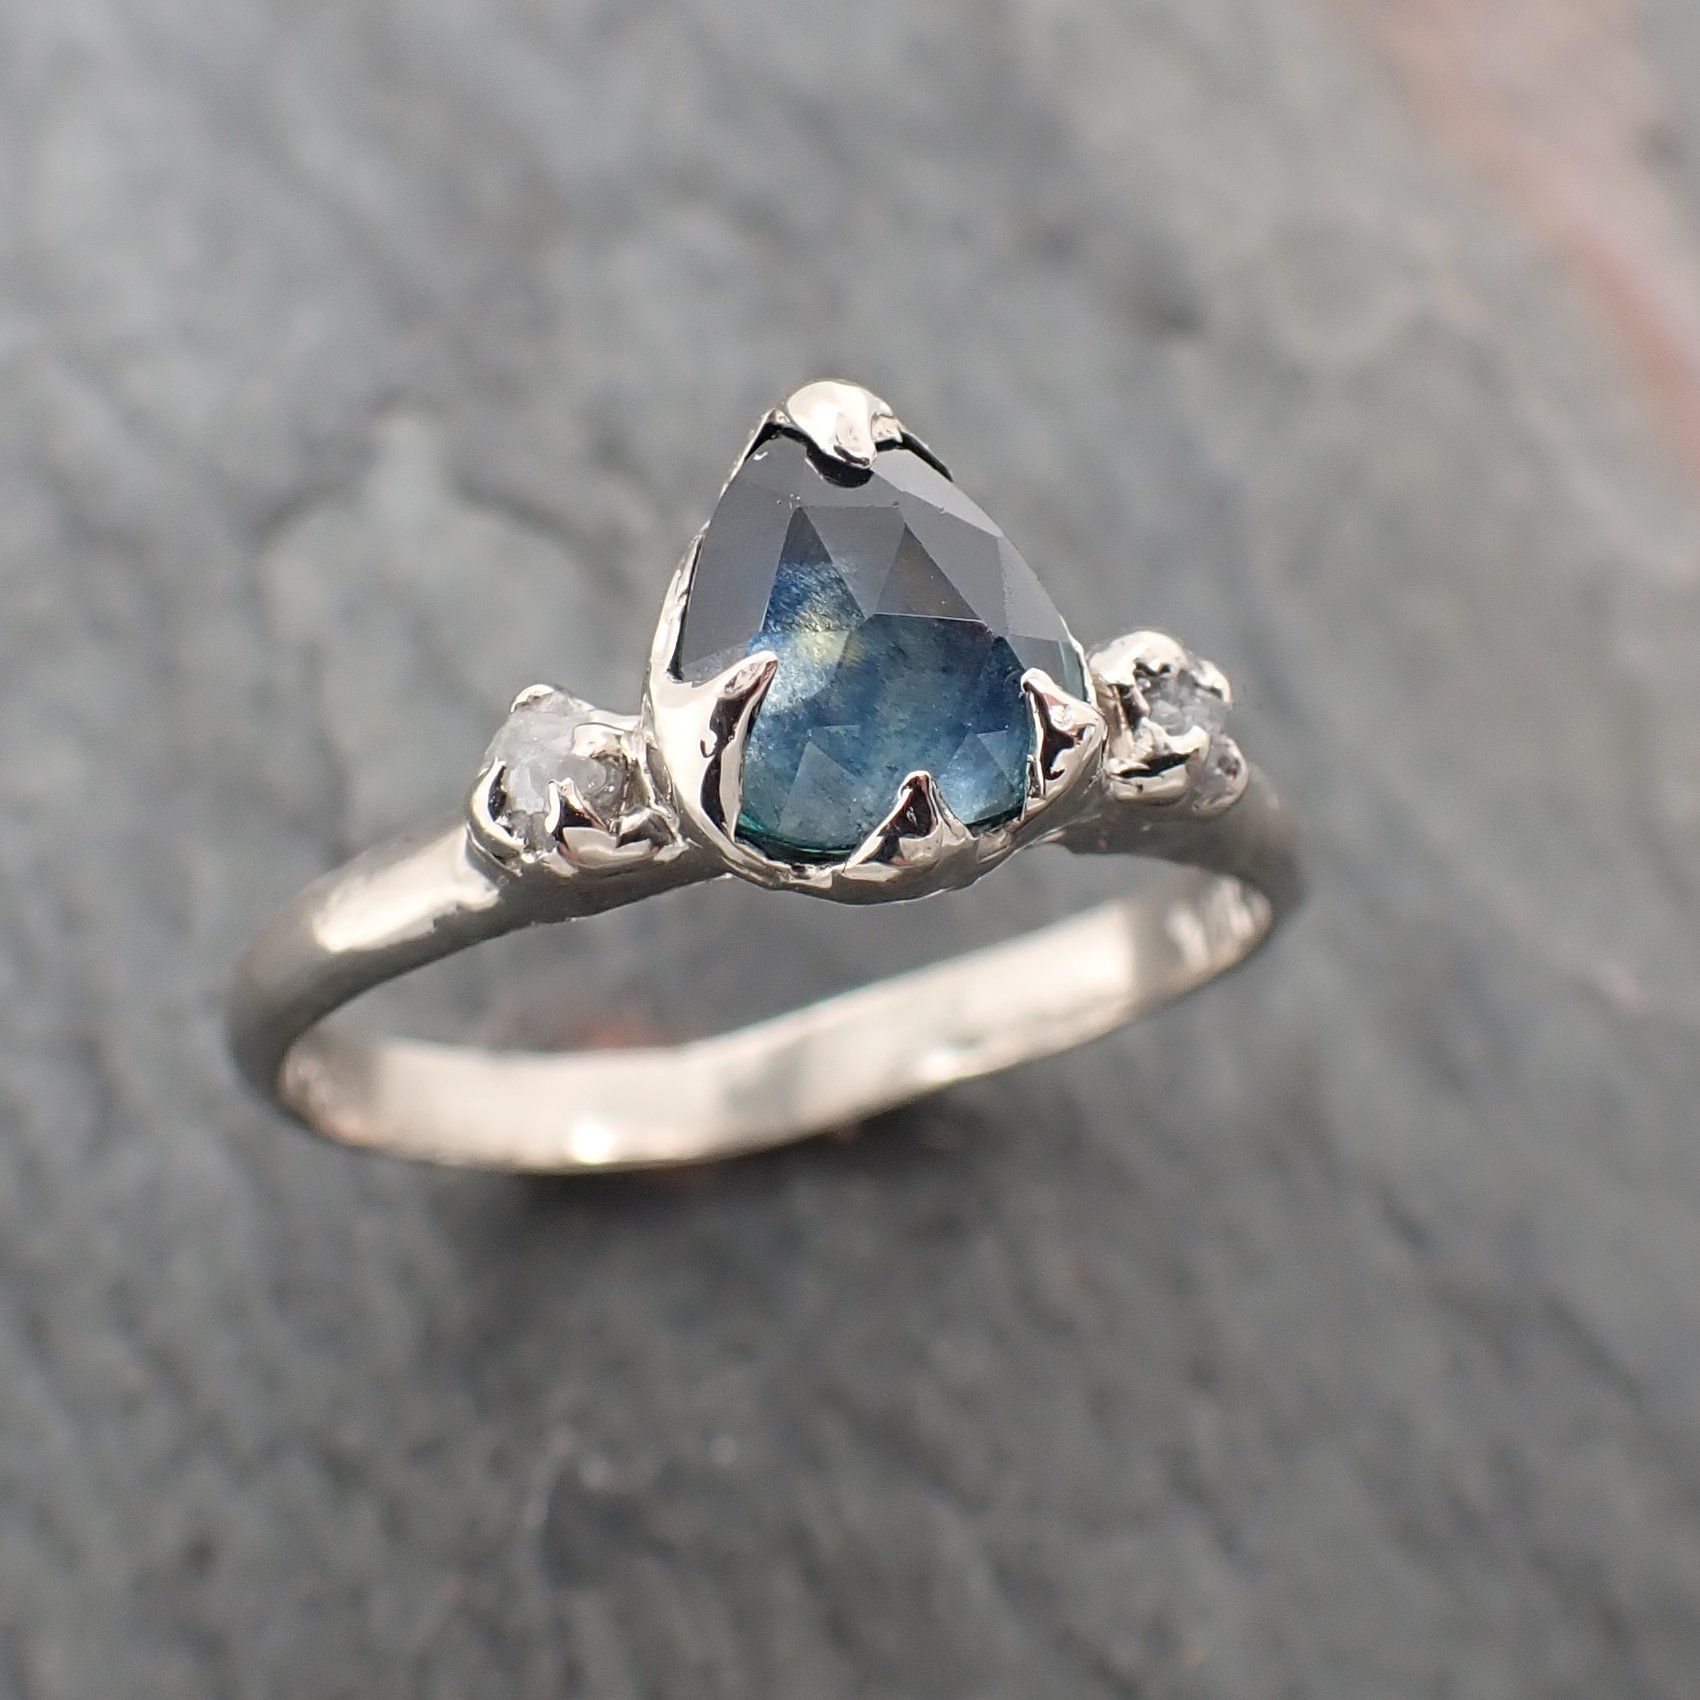 fancy cut montana blue sapphire 14k white gold ring gold multi stone gemstone engagement 2286 Alternative Engagement